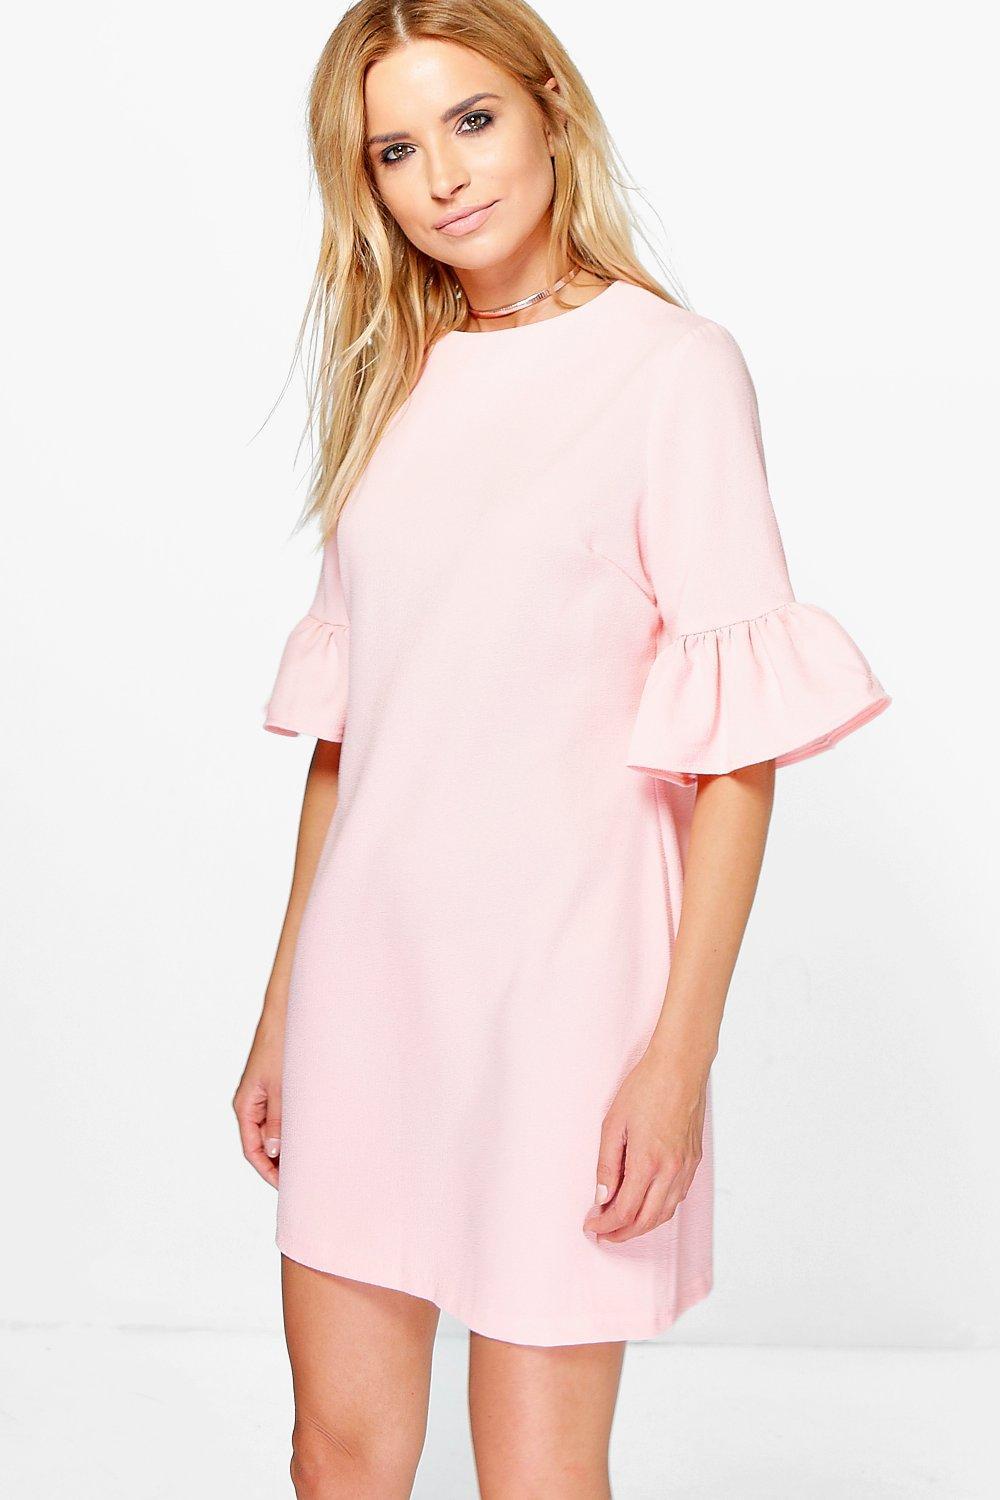 Boohoo Rhia Ruffle Sleeve Shift Dress in Pink | Lyst